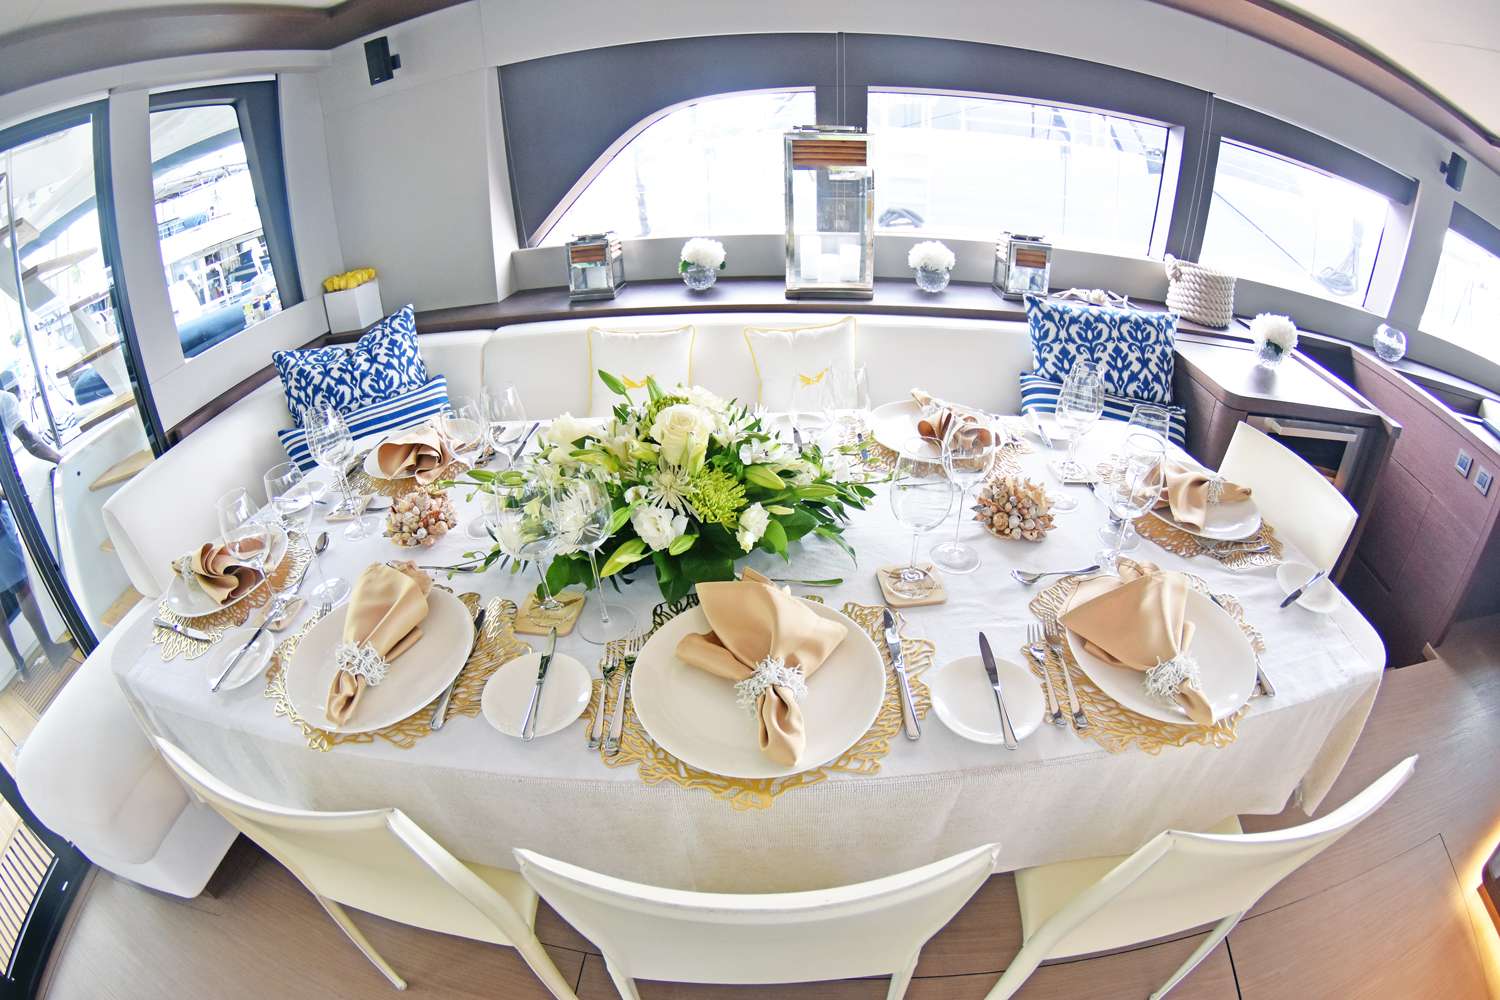 MARIAH PRINCESS III Yacht Charter - Interior Dining